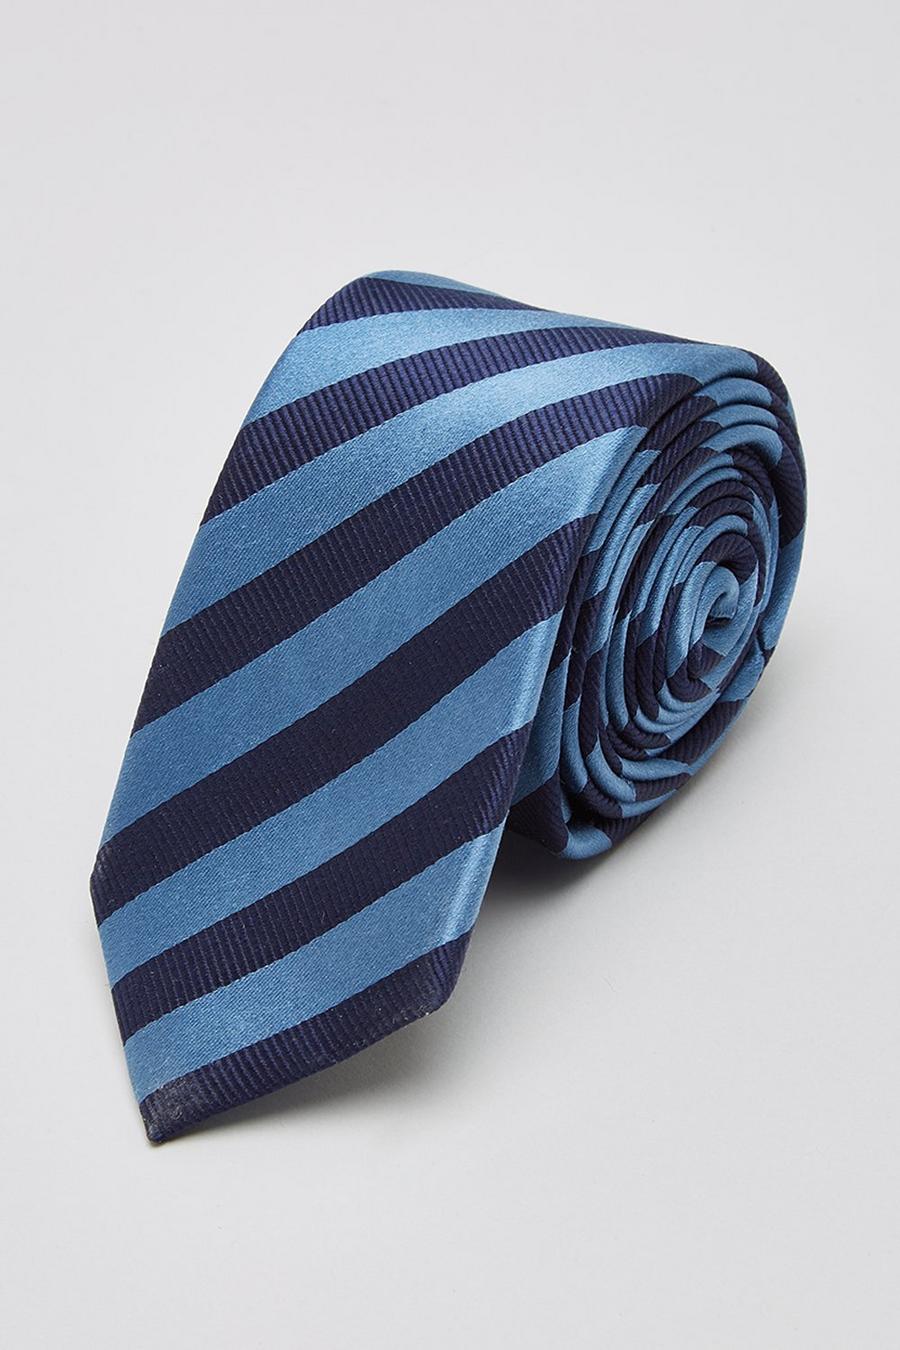 Ben Sherman Blue Stripe Tie